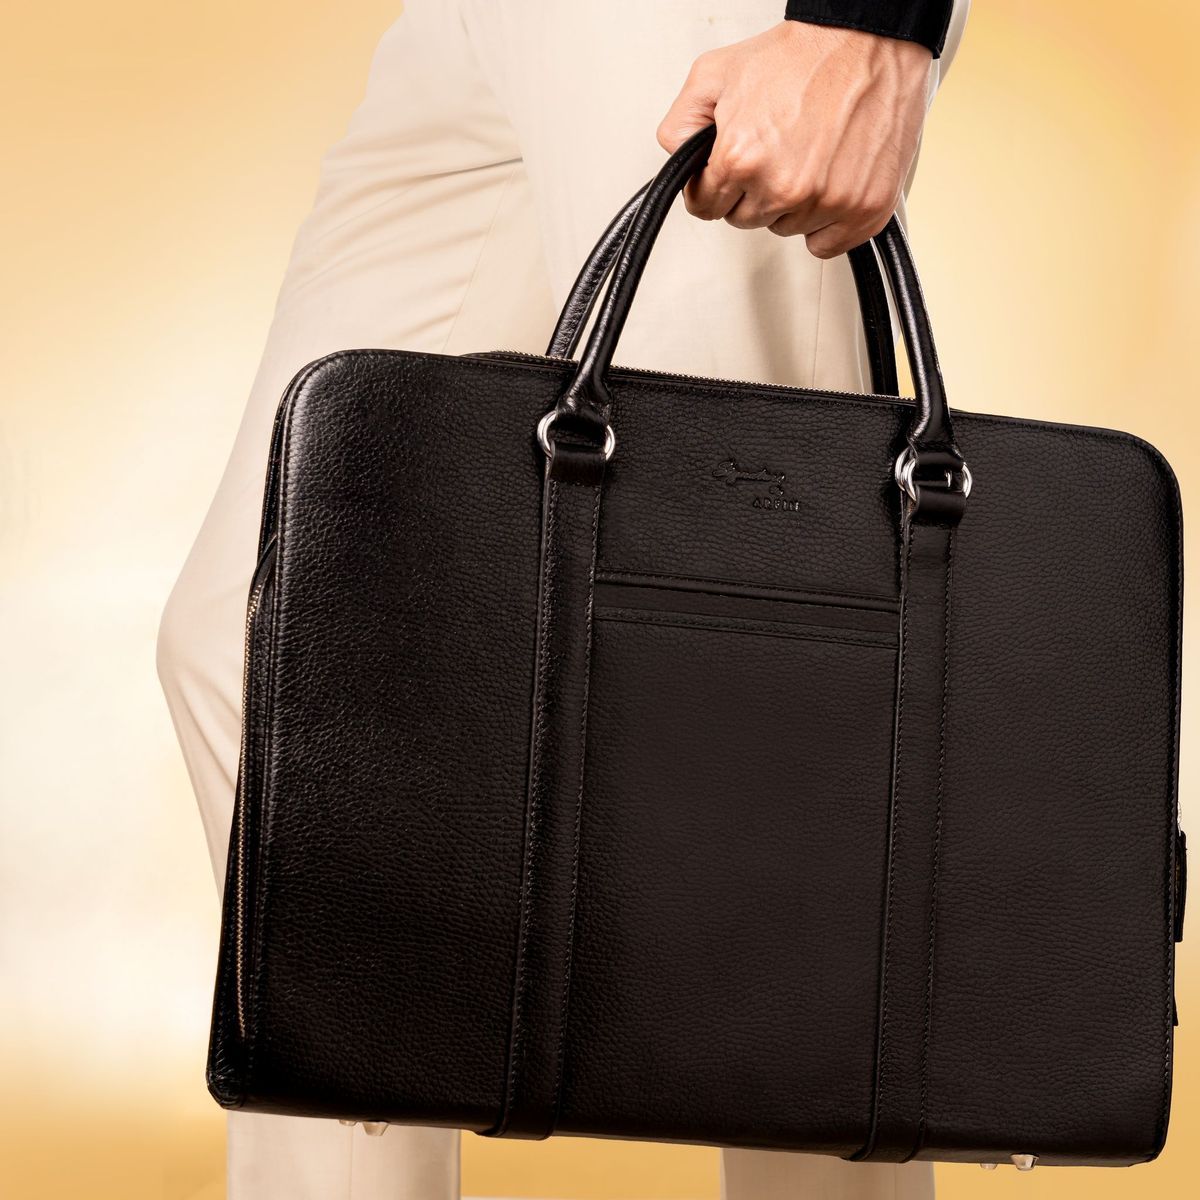 Black Formal Executive Bag Image